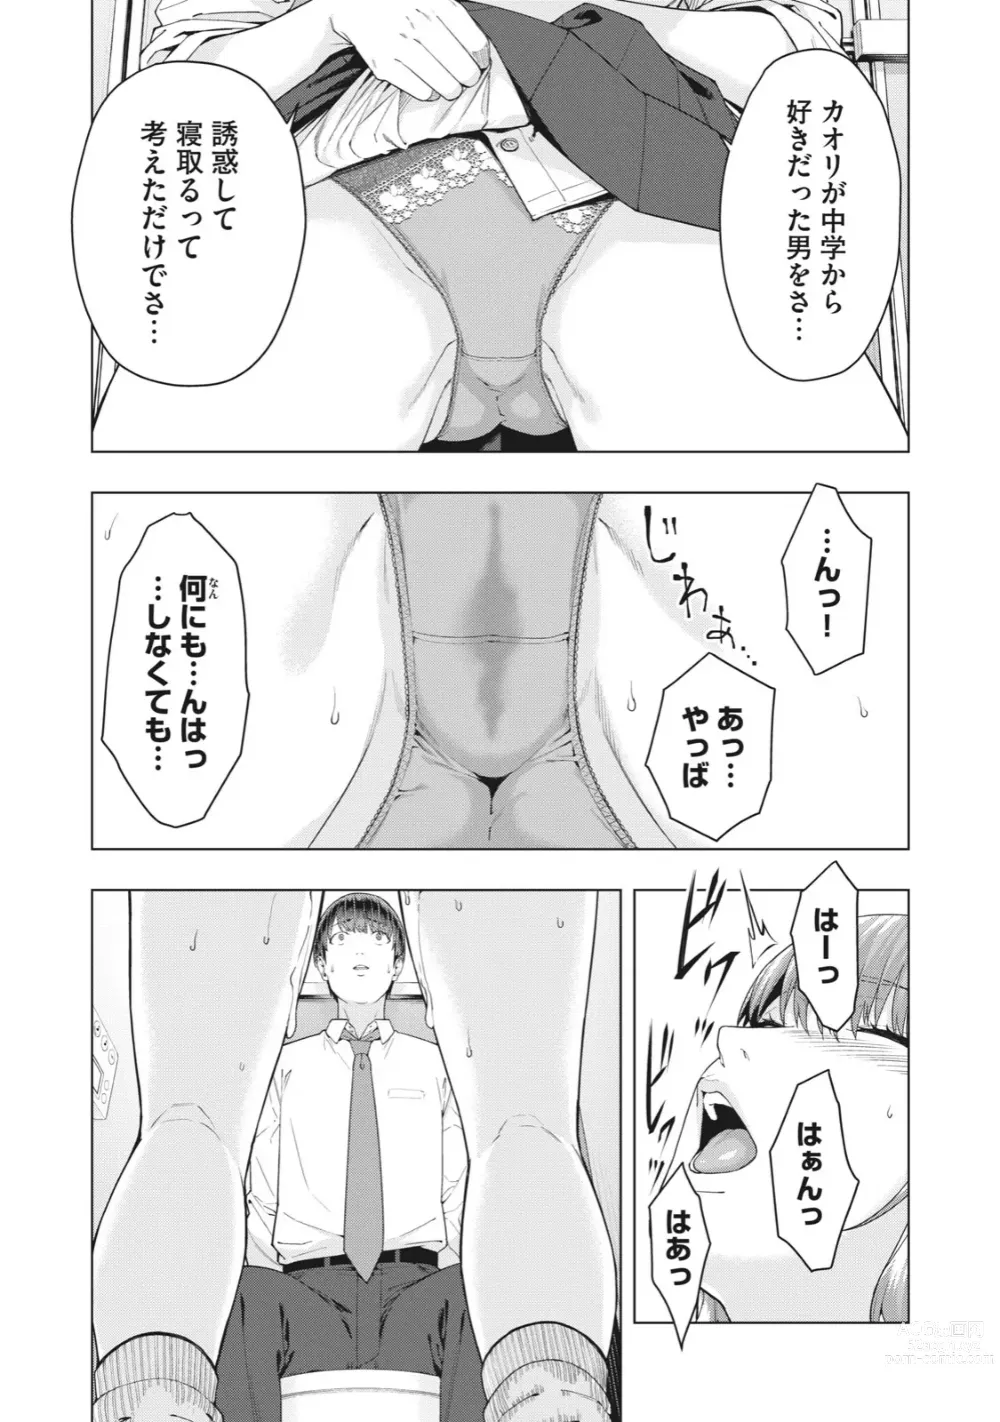 Page 24 of manga Kanojo no Tomodachi